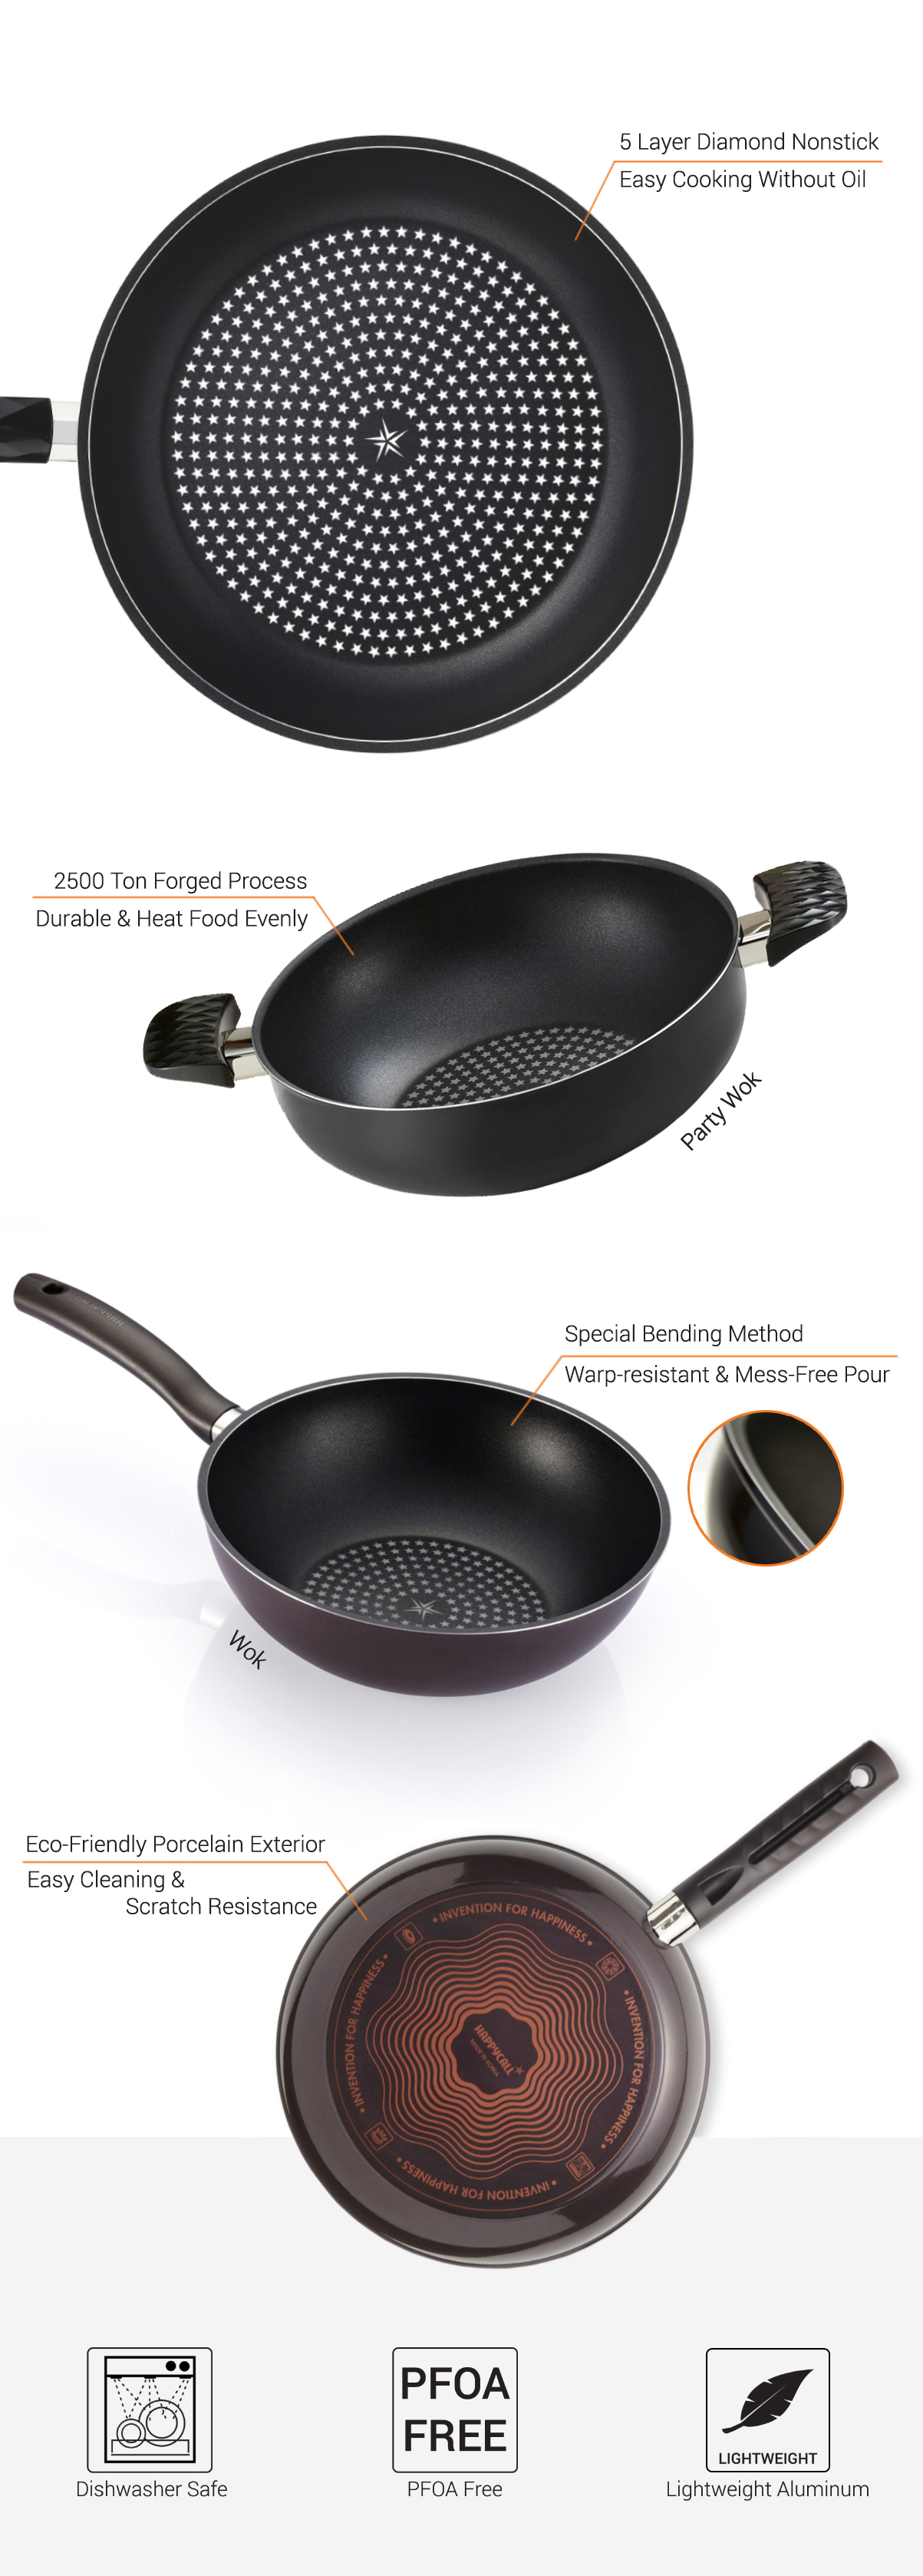 Happycall] Double Sided Pan Big Size Pressure Jumbo Red Frying Pan